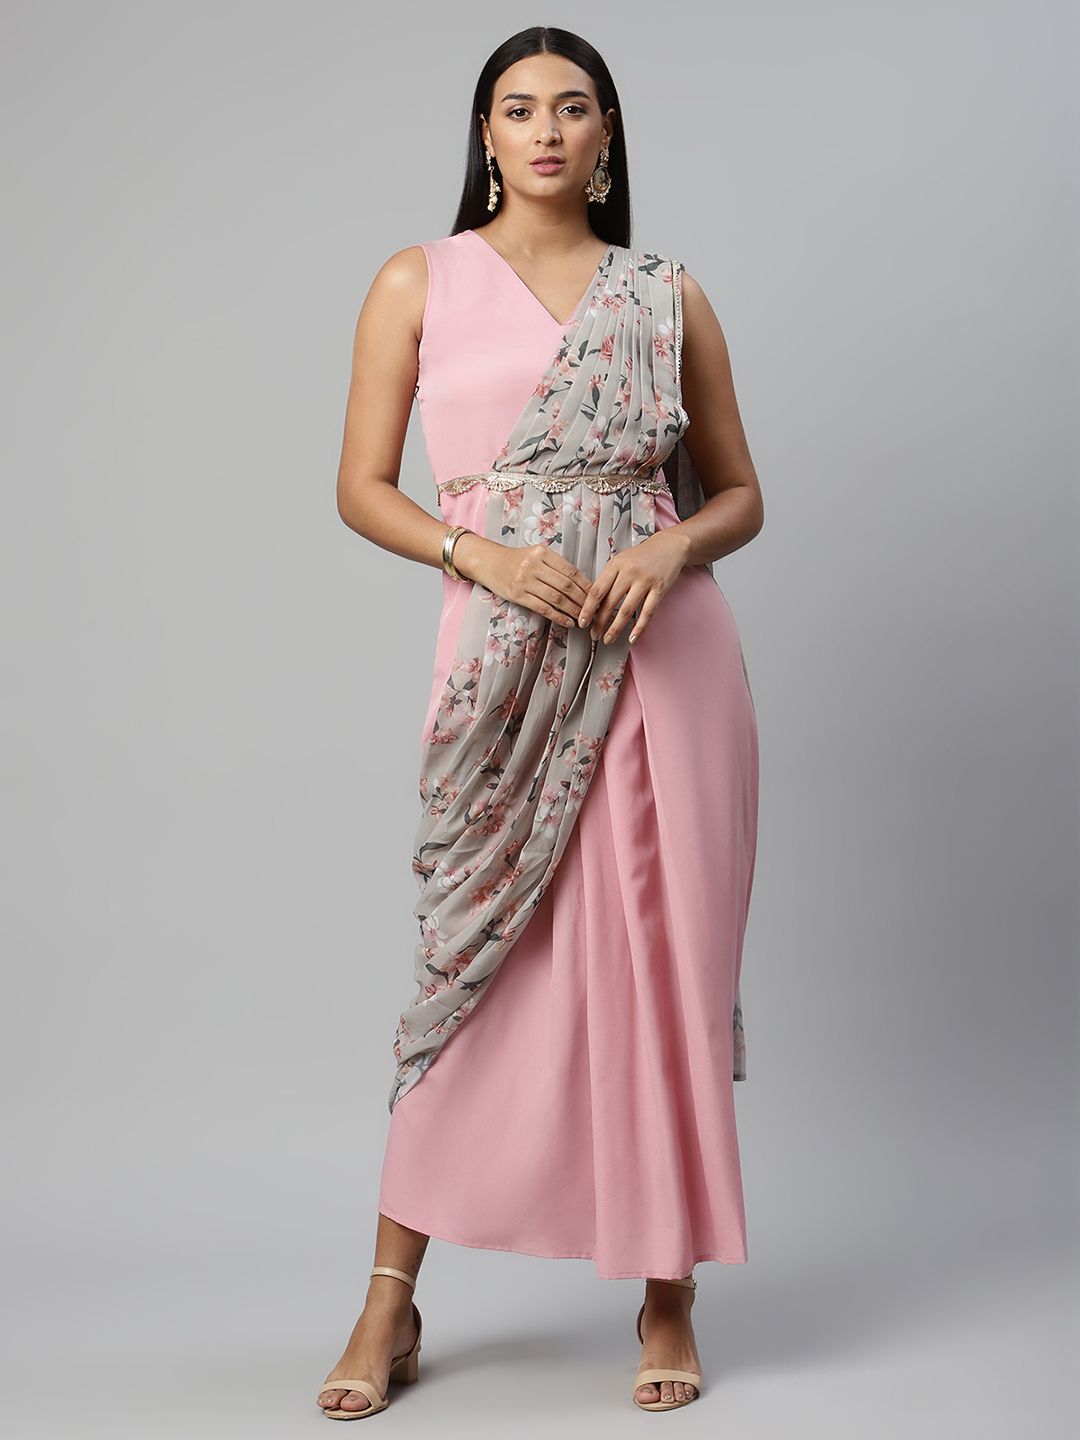 Baby Pink Georgette Saree Dress With Printed Pallu